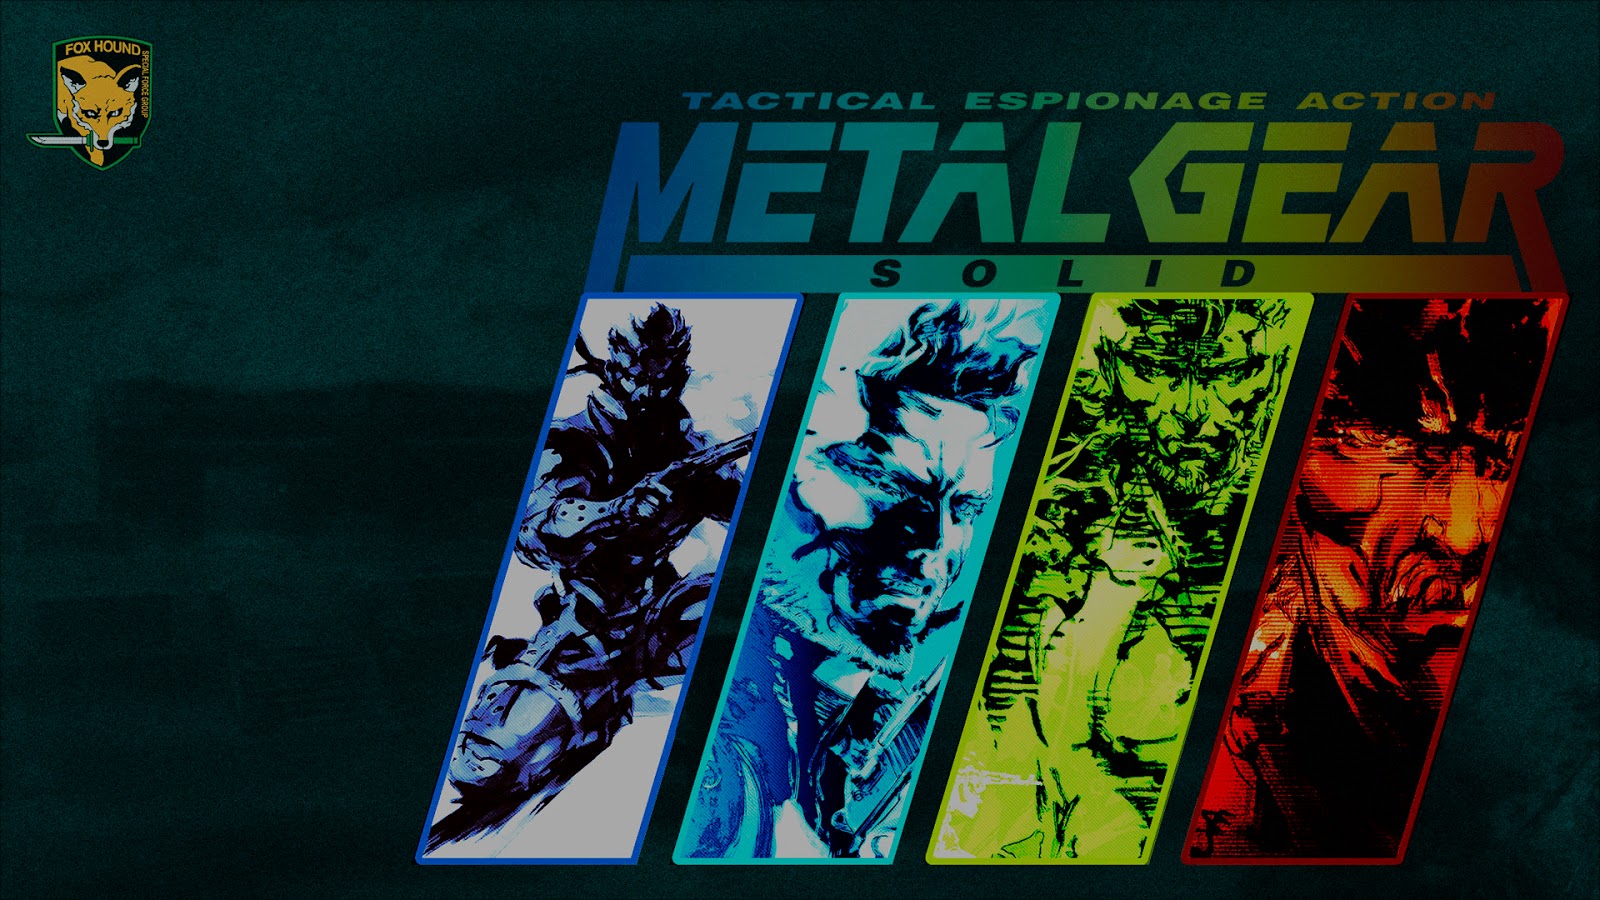 50 Hd Metal Gear Solid Wallpapers For Desktop Page 2 Of 5 We 7